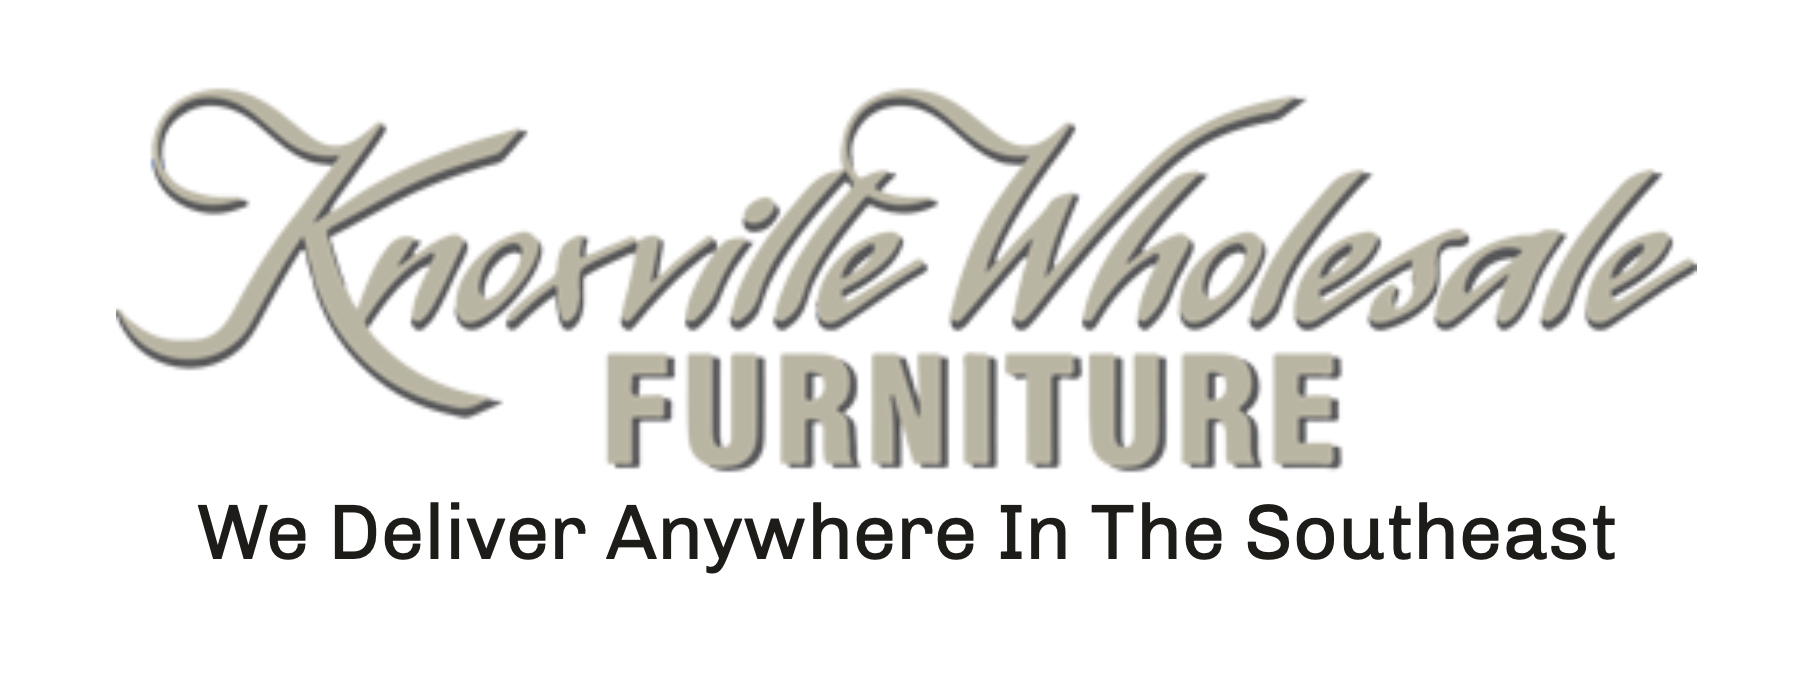 knoxville_wholesale_furniture_logo